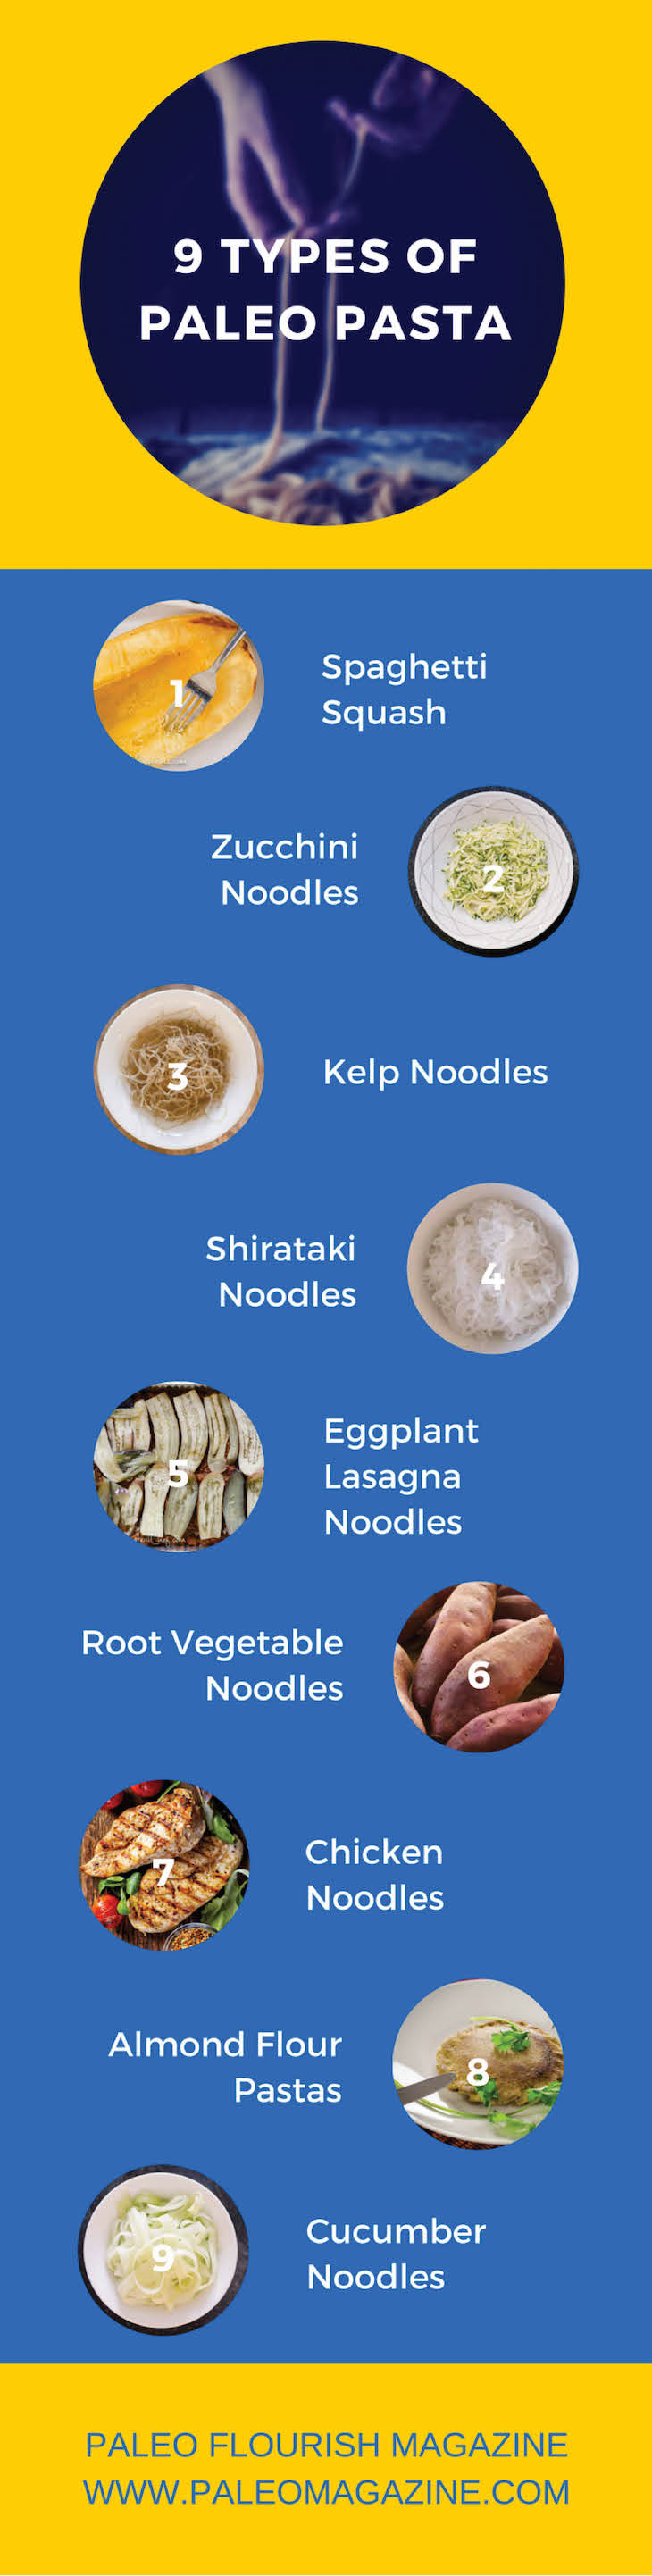 Types of Paleo Pasta Infographic #paleo #pasta #infographic https://paleoflourish.com/types-of-paleo-pasta